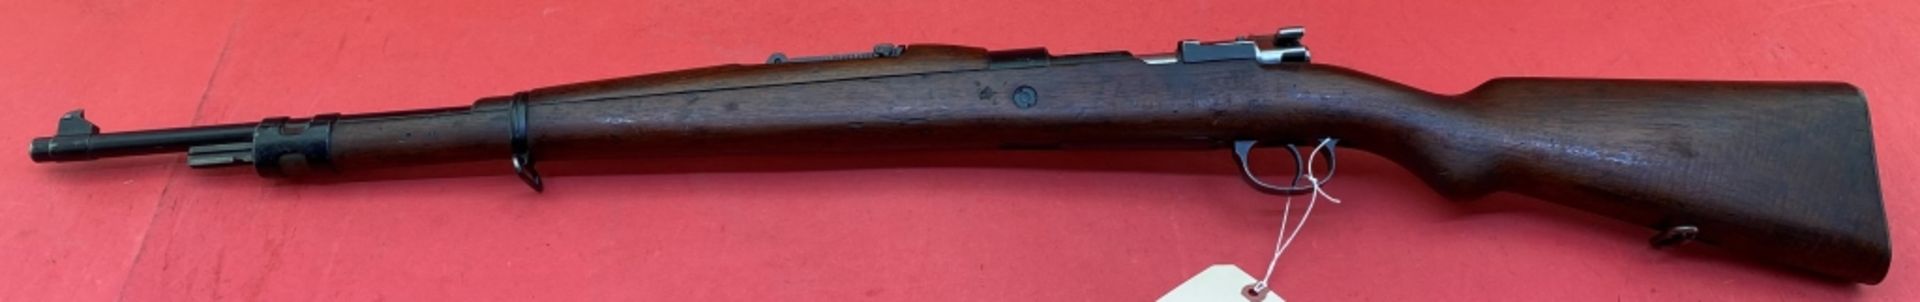 FN M1950 .30-06 Rifle - Image 12 of 12